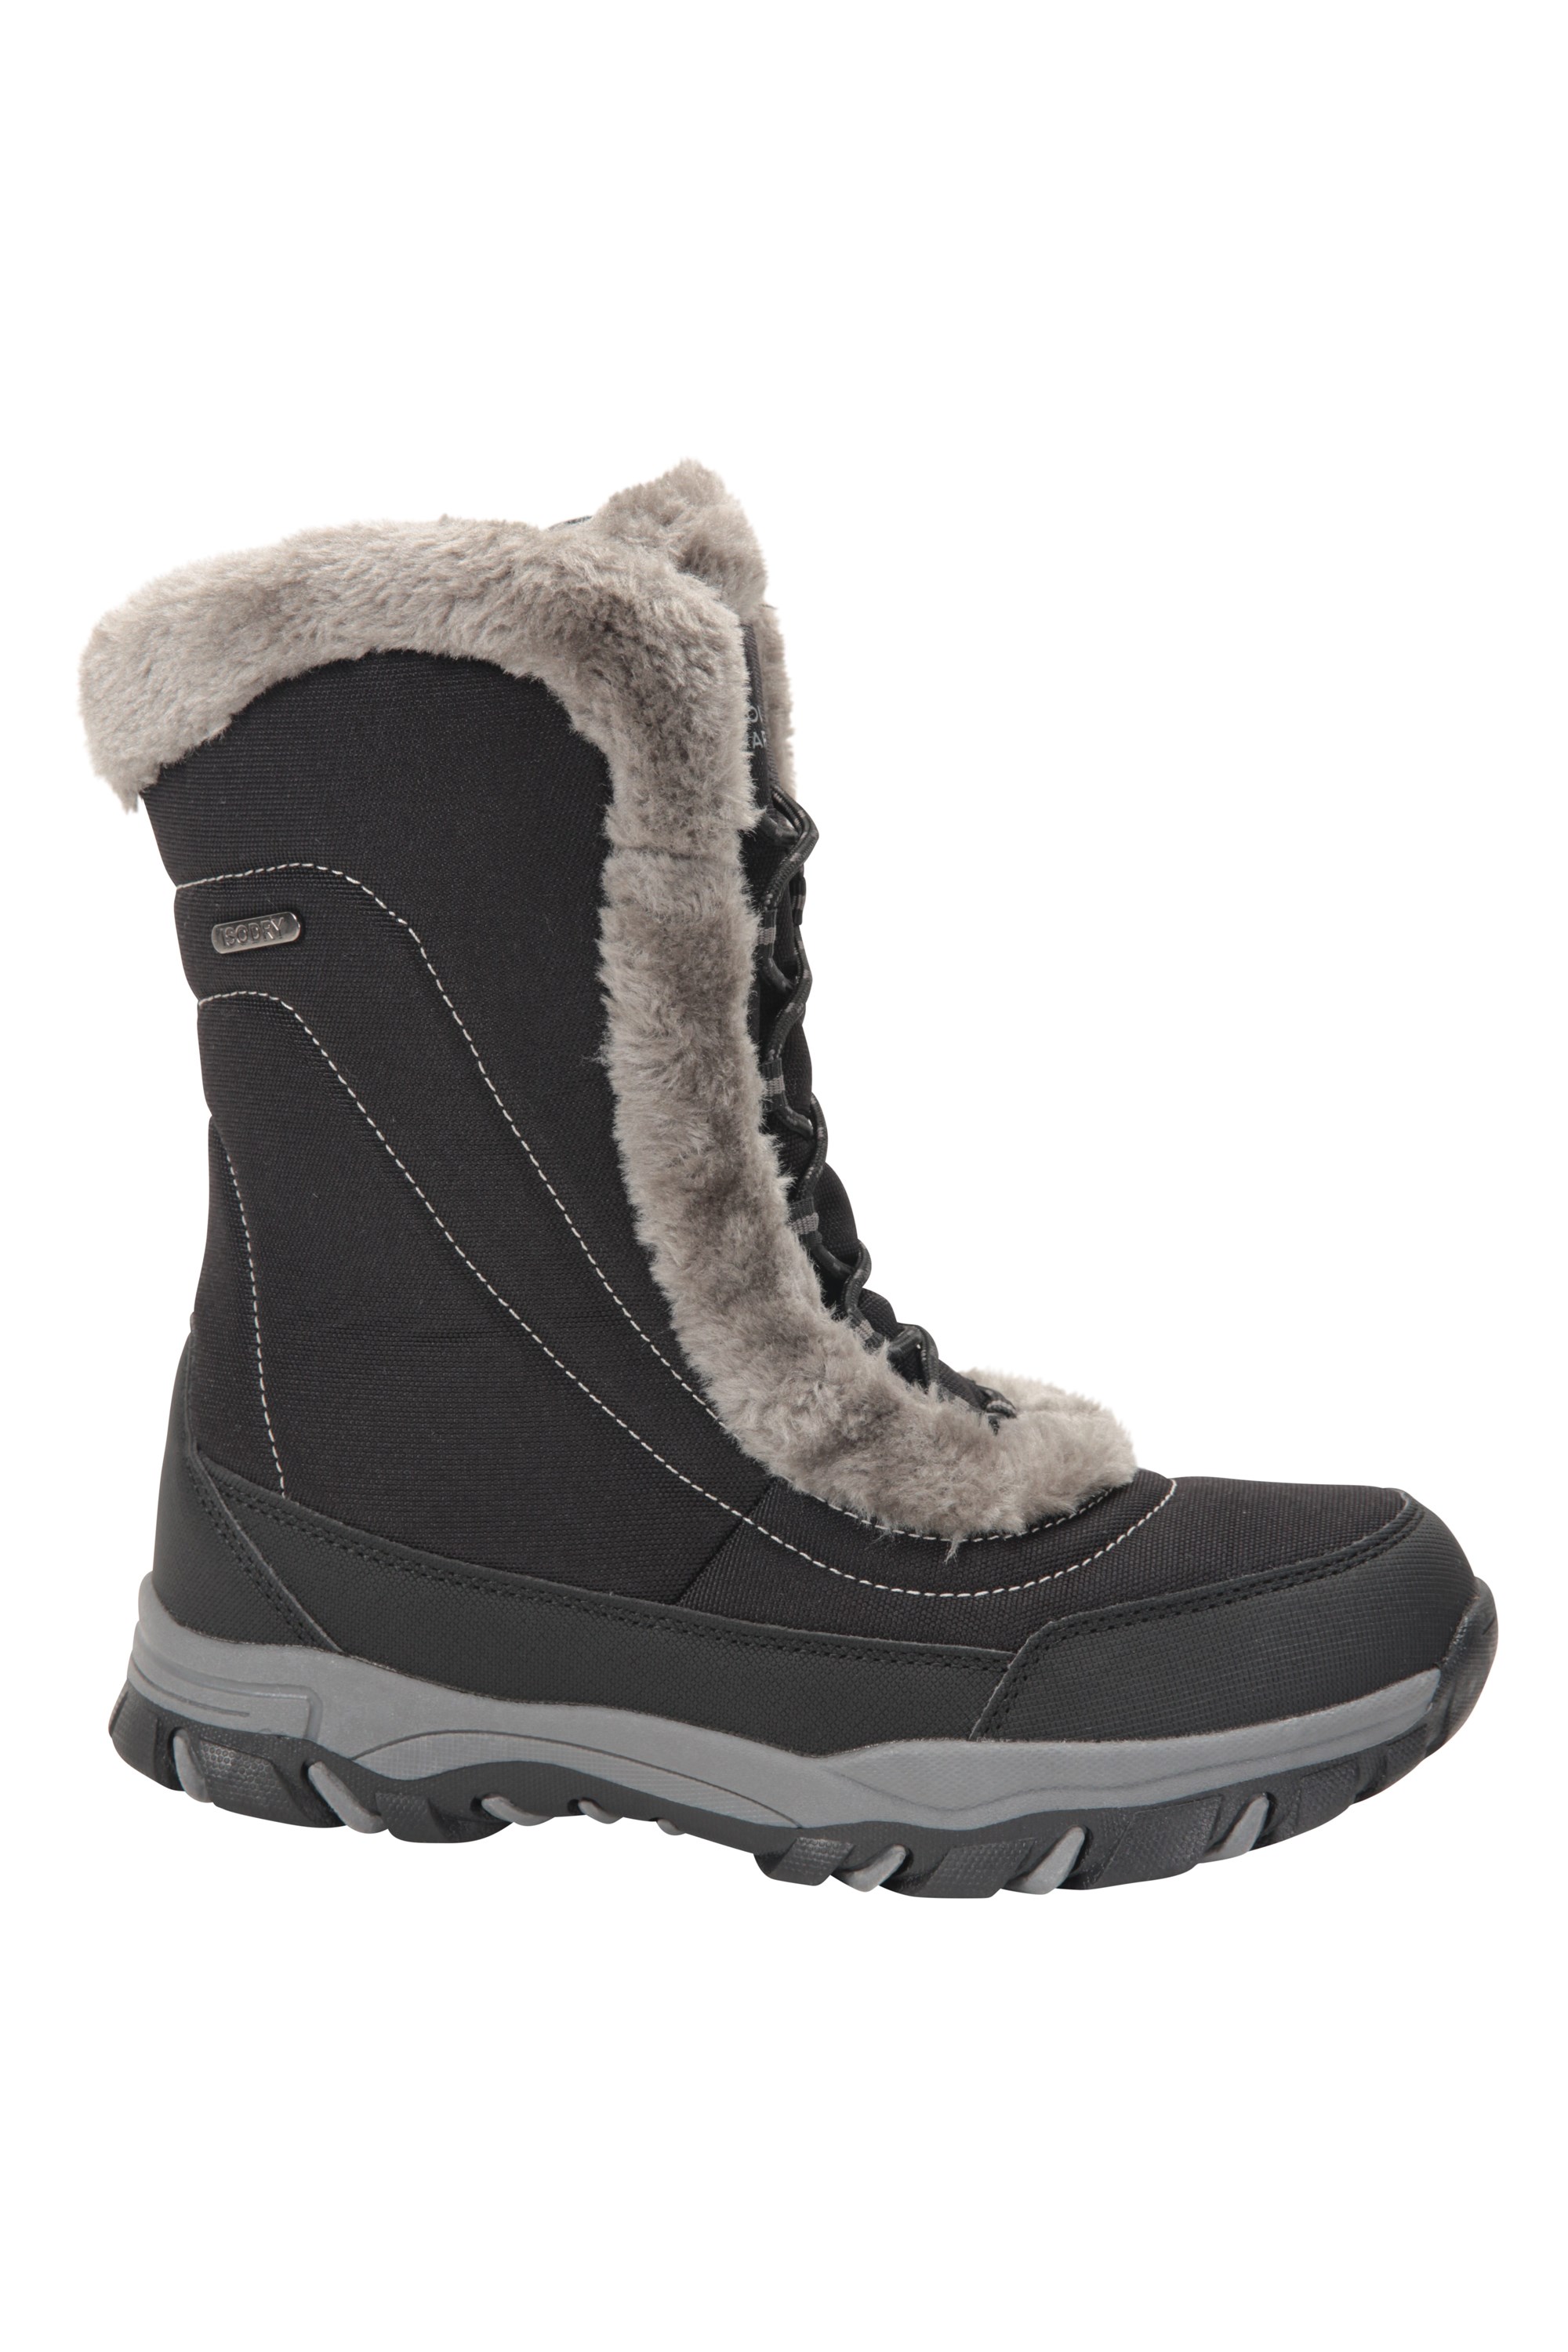 mountain warehouse mens snow boots